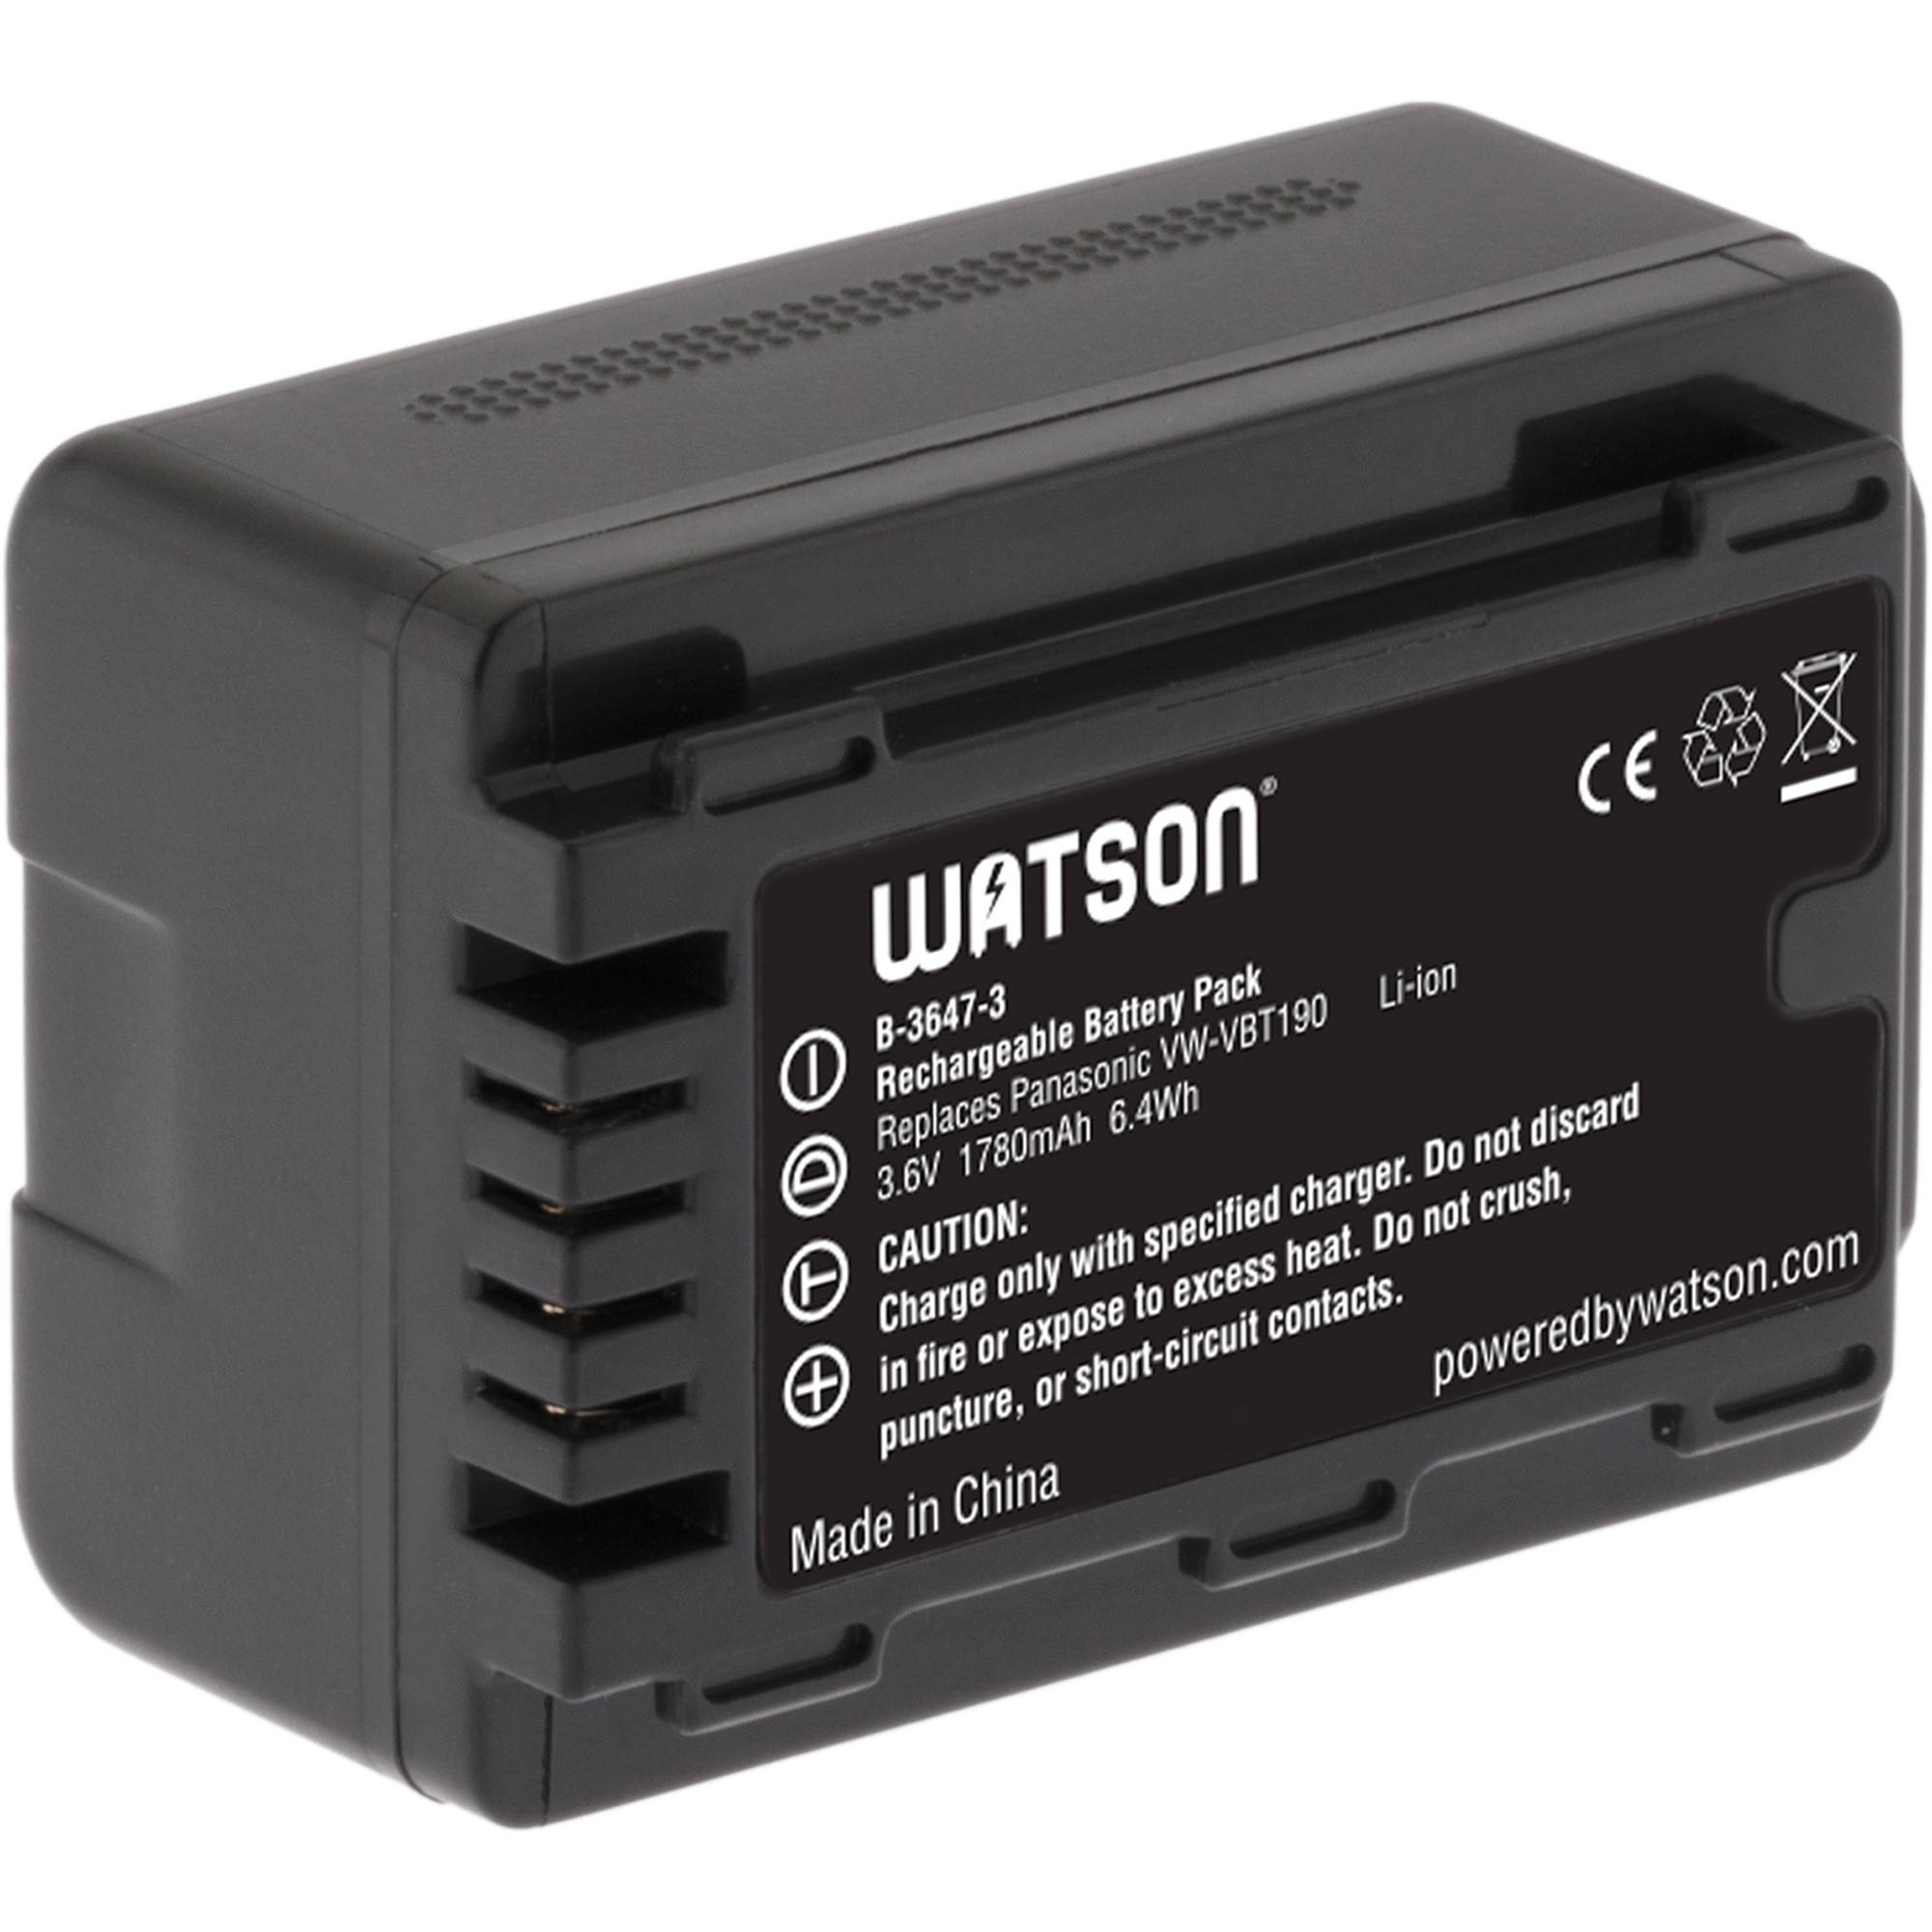 Watson Vw Vbt190 Lithium Ion Battery Pack 3 6v 1780mah